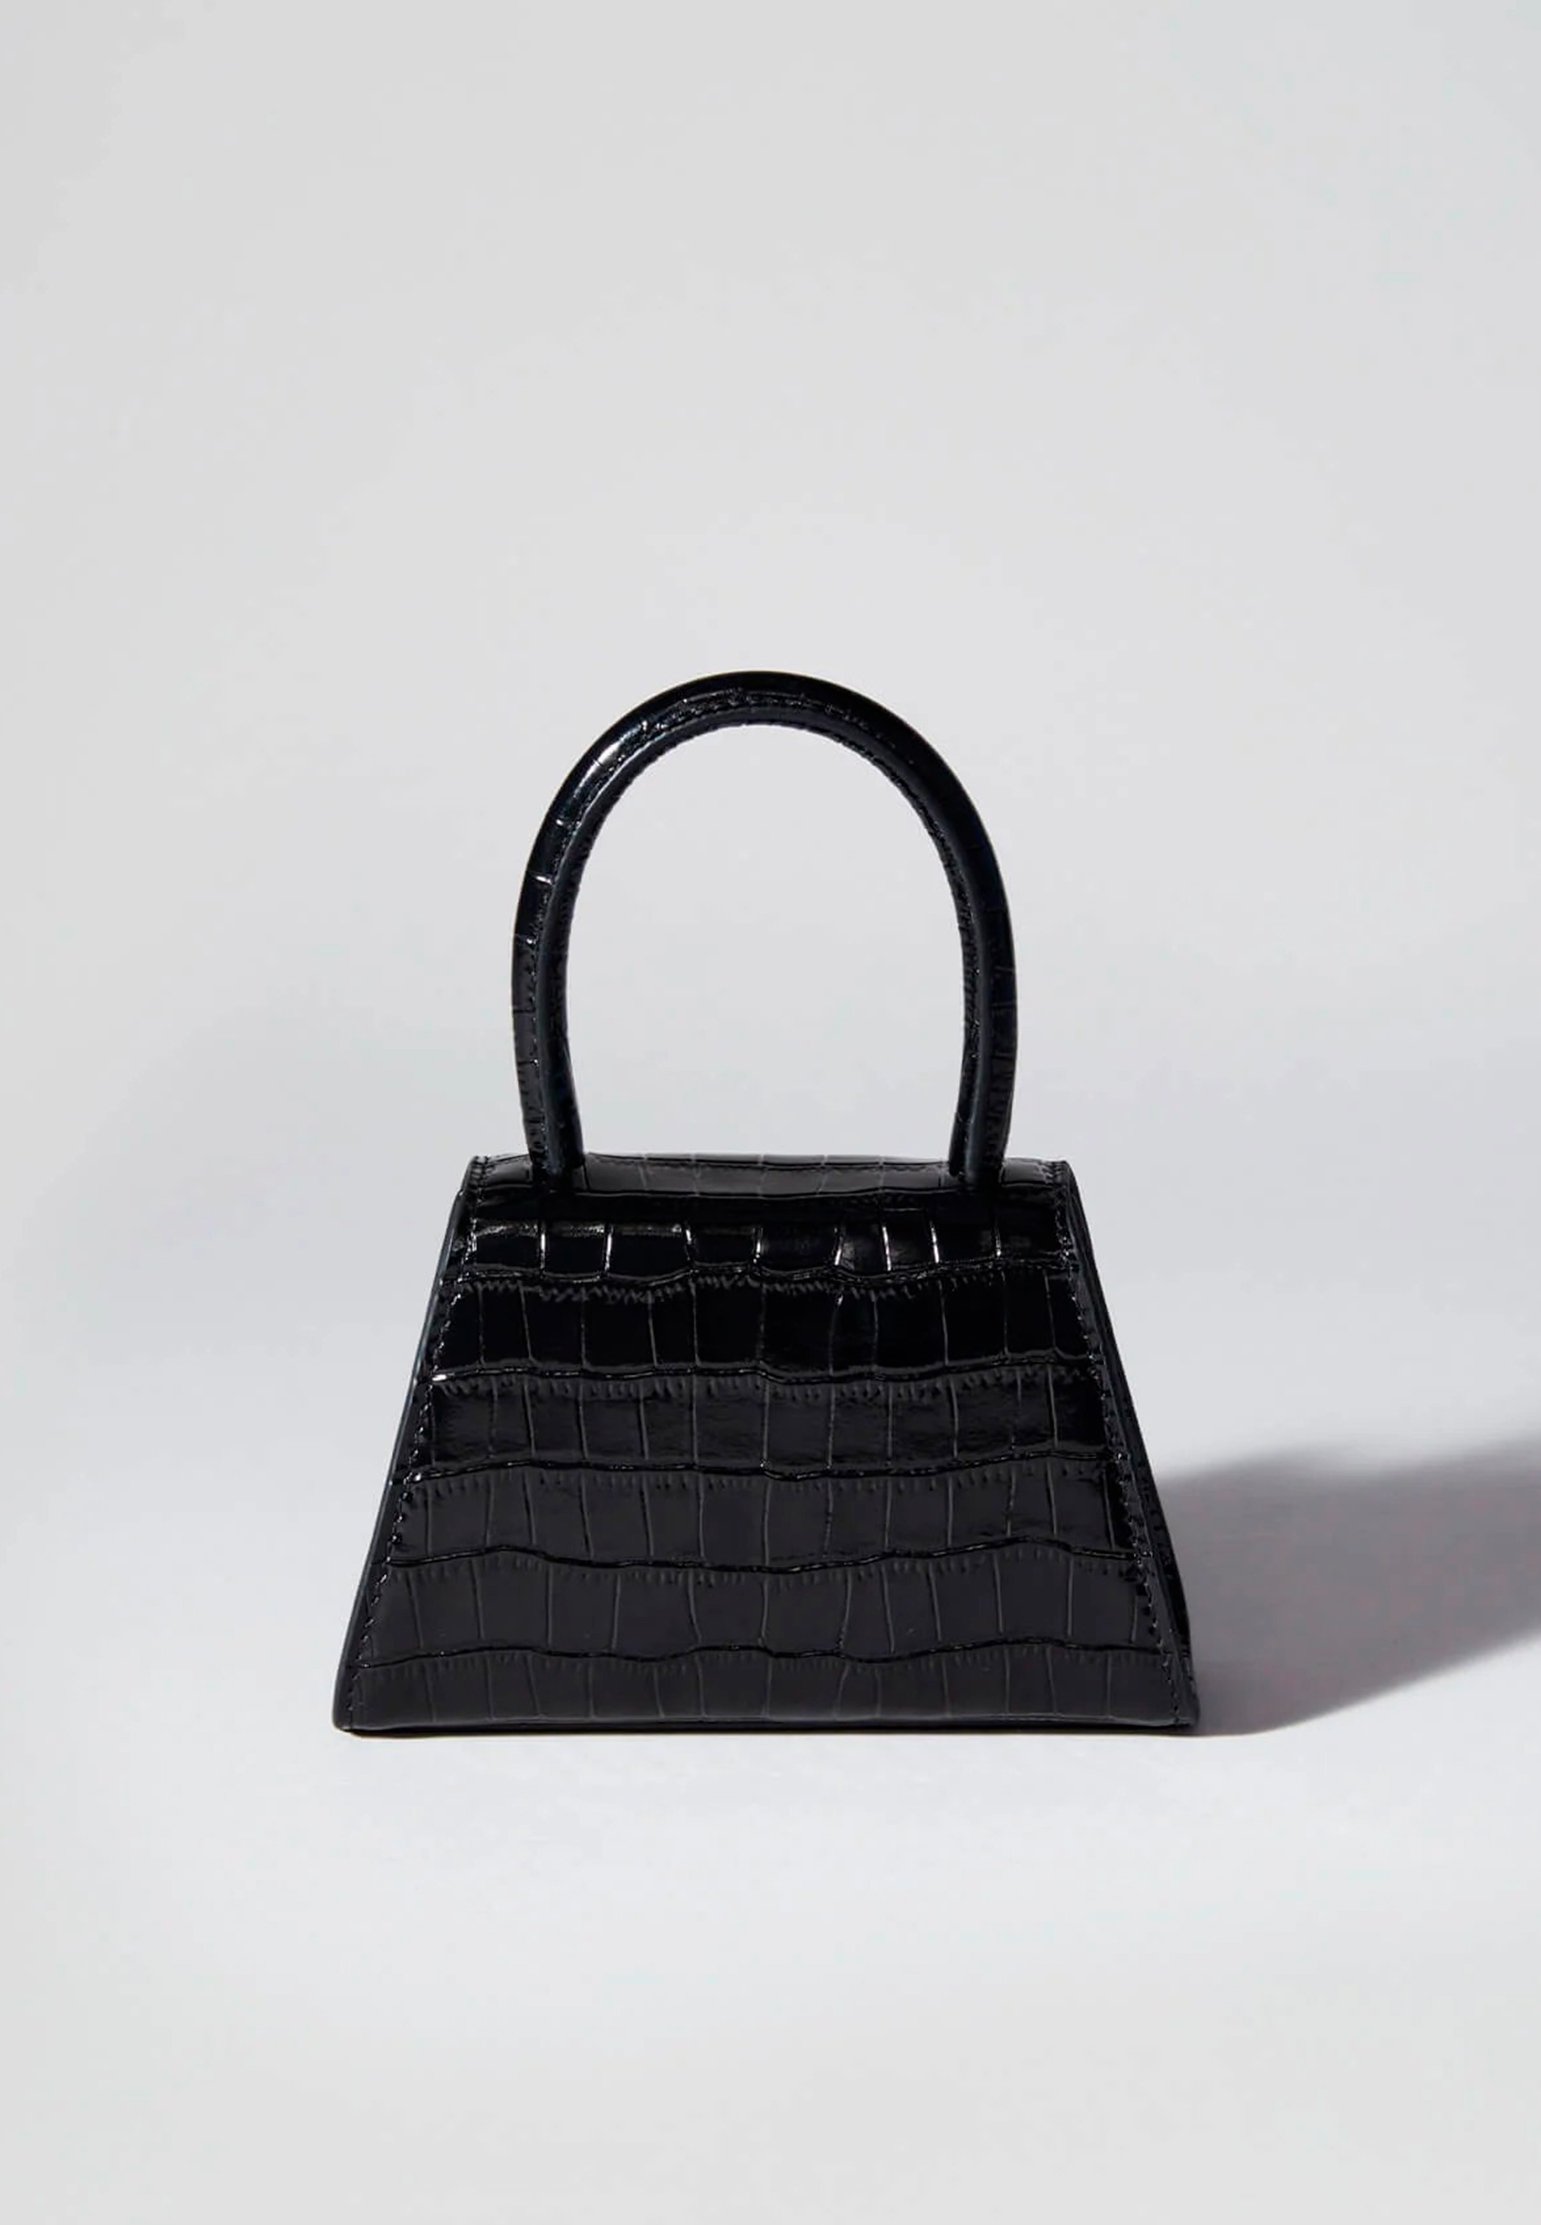 Bag SELF-PORTRAIT Color: black (Code: 2771) in online store Allure